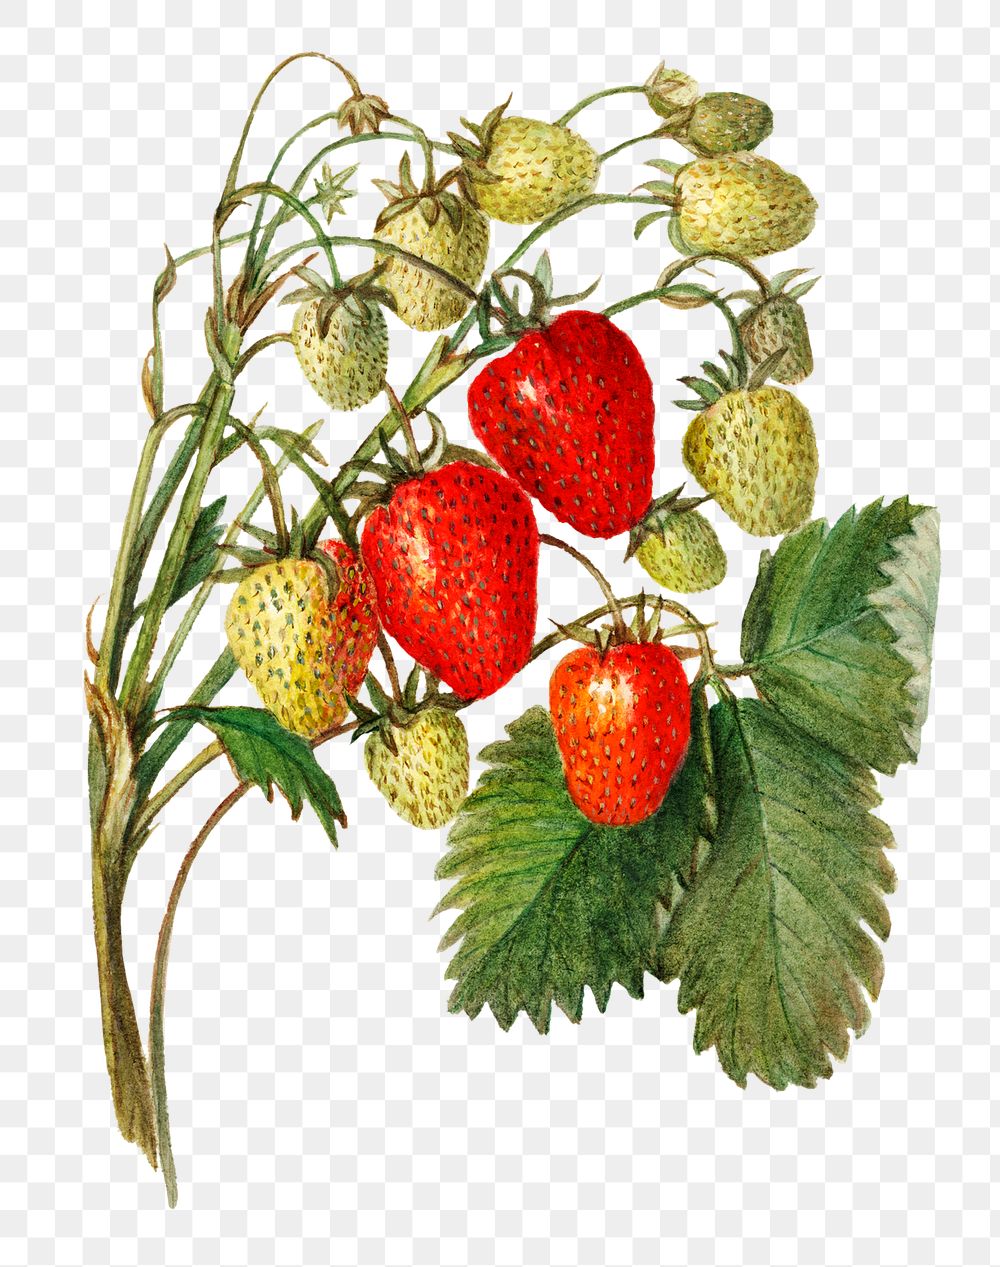 Vintage strawberries transparent png. Digitally enhanced illustration from U.S. Department of Agriculture Pomological…